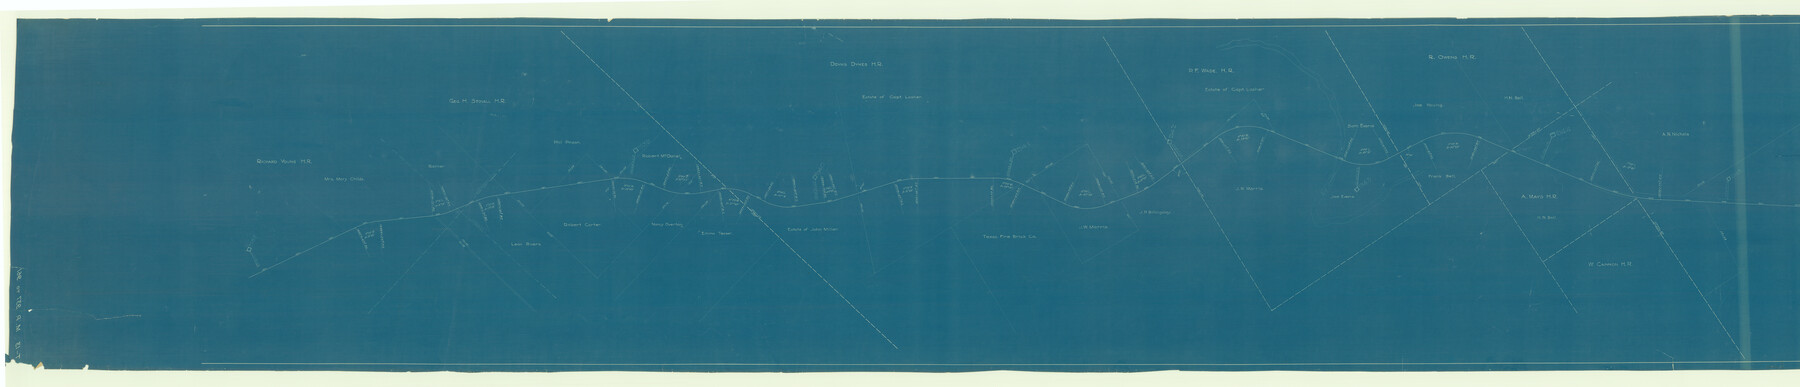 64028, [Missouri, Kansas & Texas Line Map through Bastrop County], General Map Collection